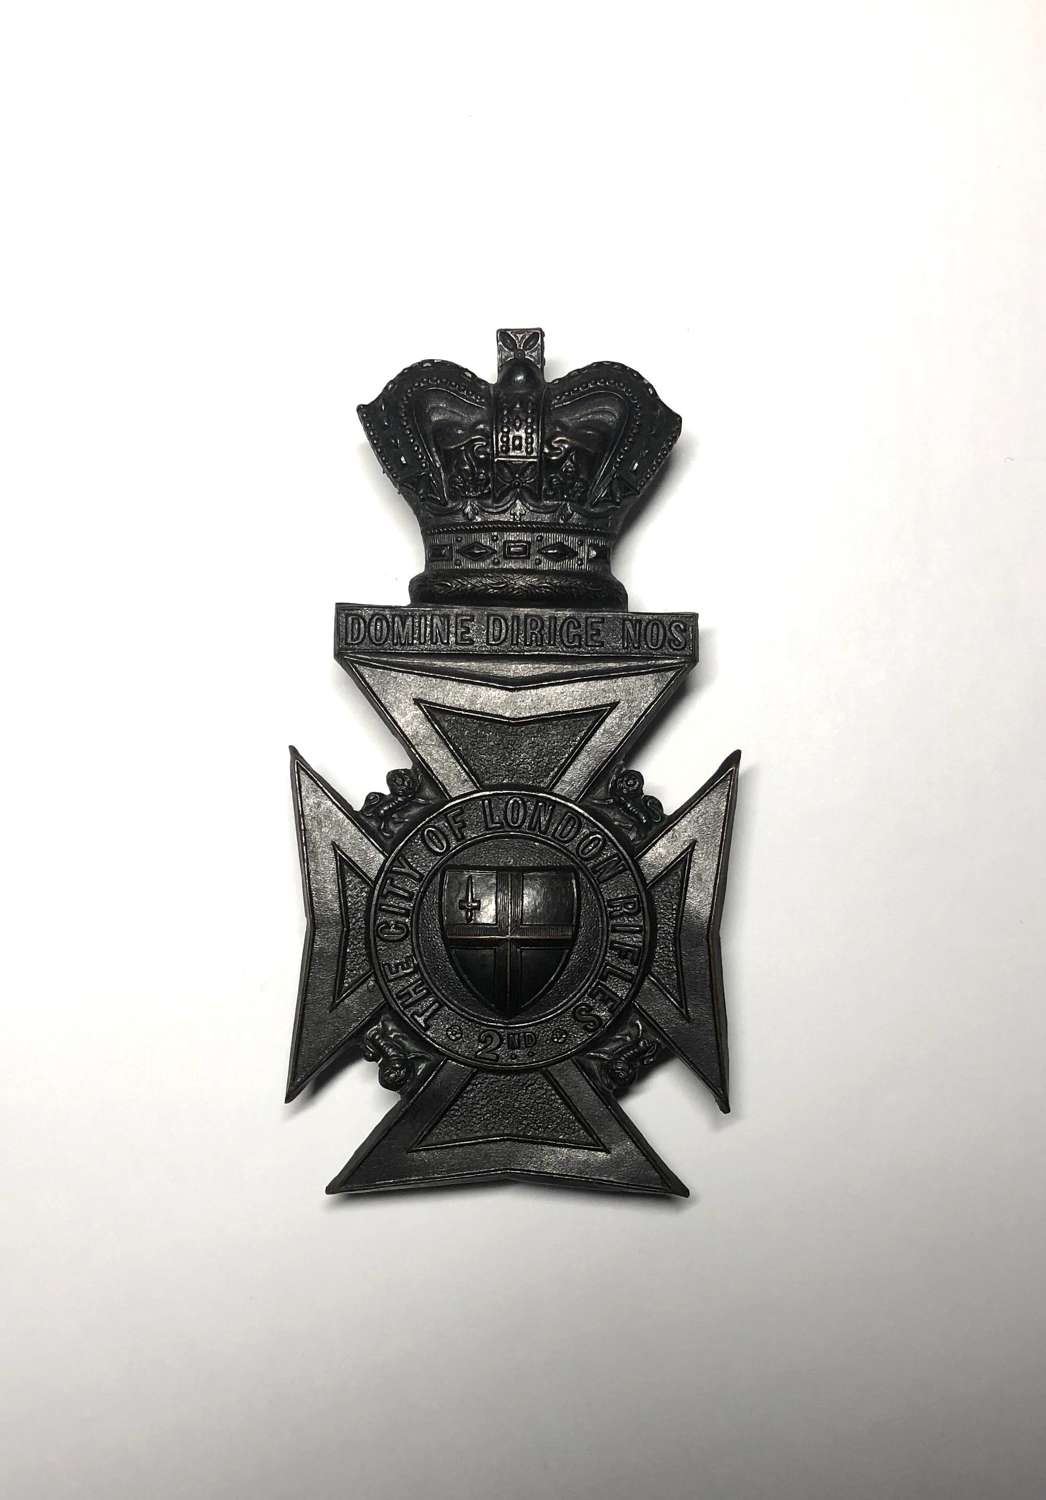 2nd City of London Rifles Victorian Sergeant’s pouch belt plate